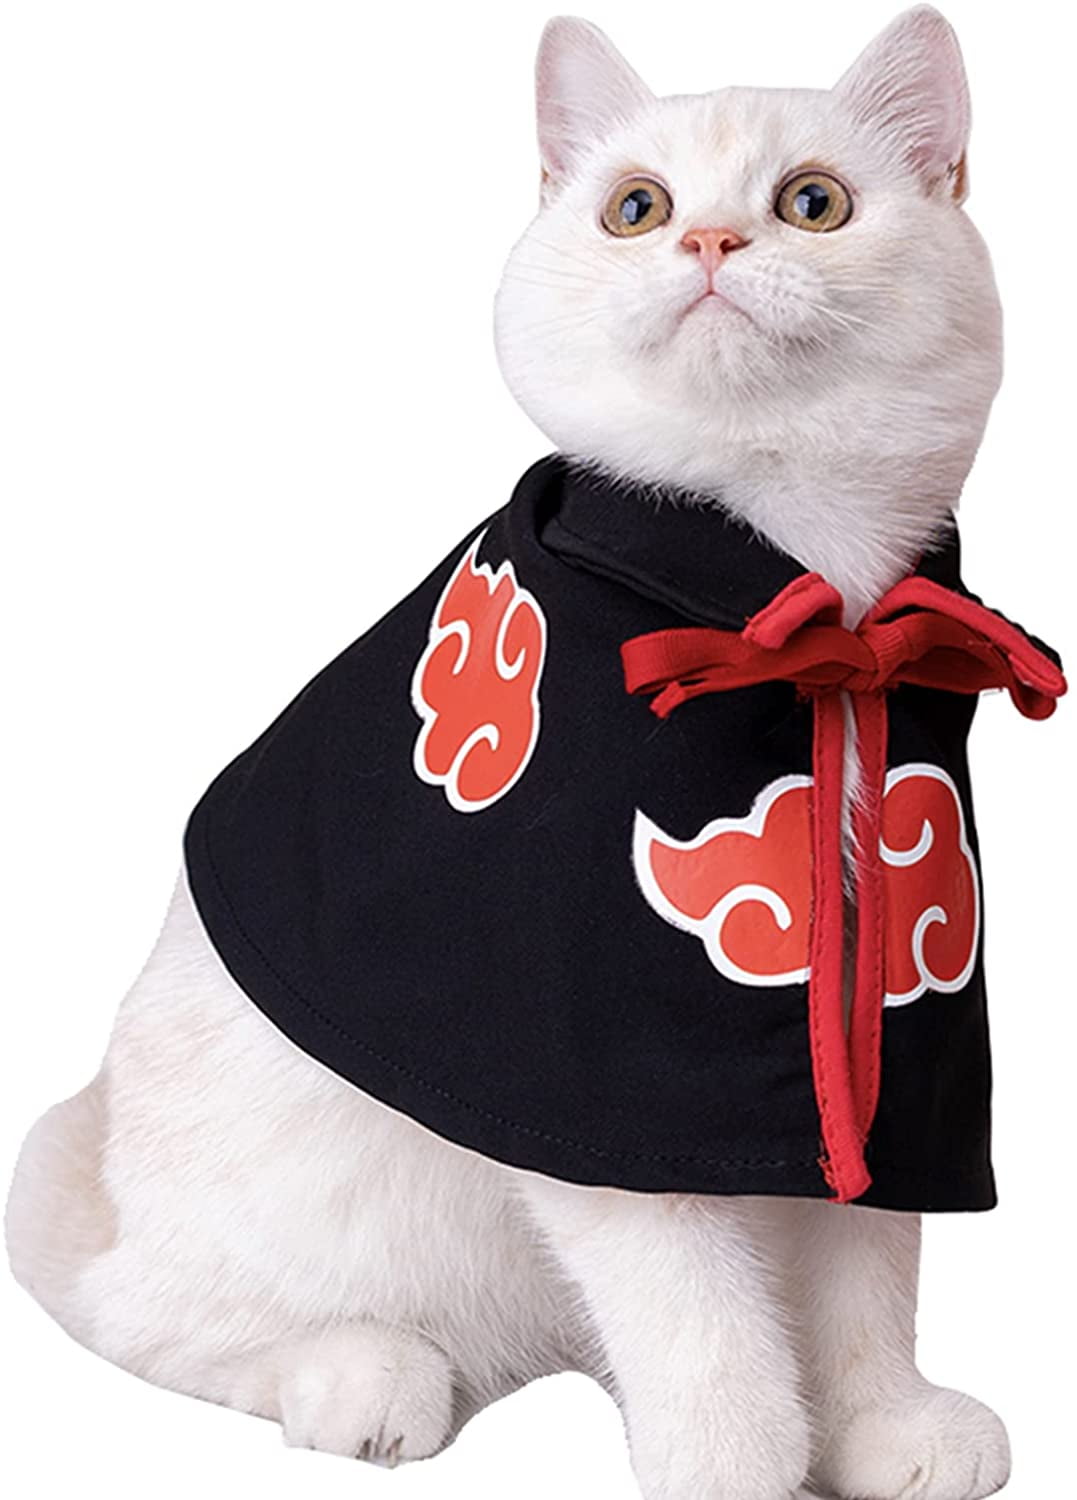 UK Pet Puppy Small Dog Cat Lovely Pet Clothes Dress Vest T Shirt Apparel Costume 